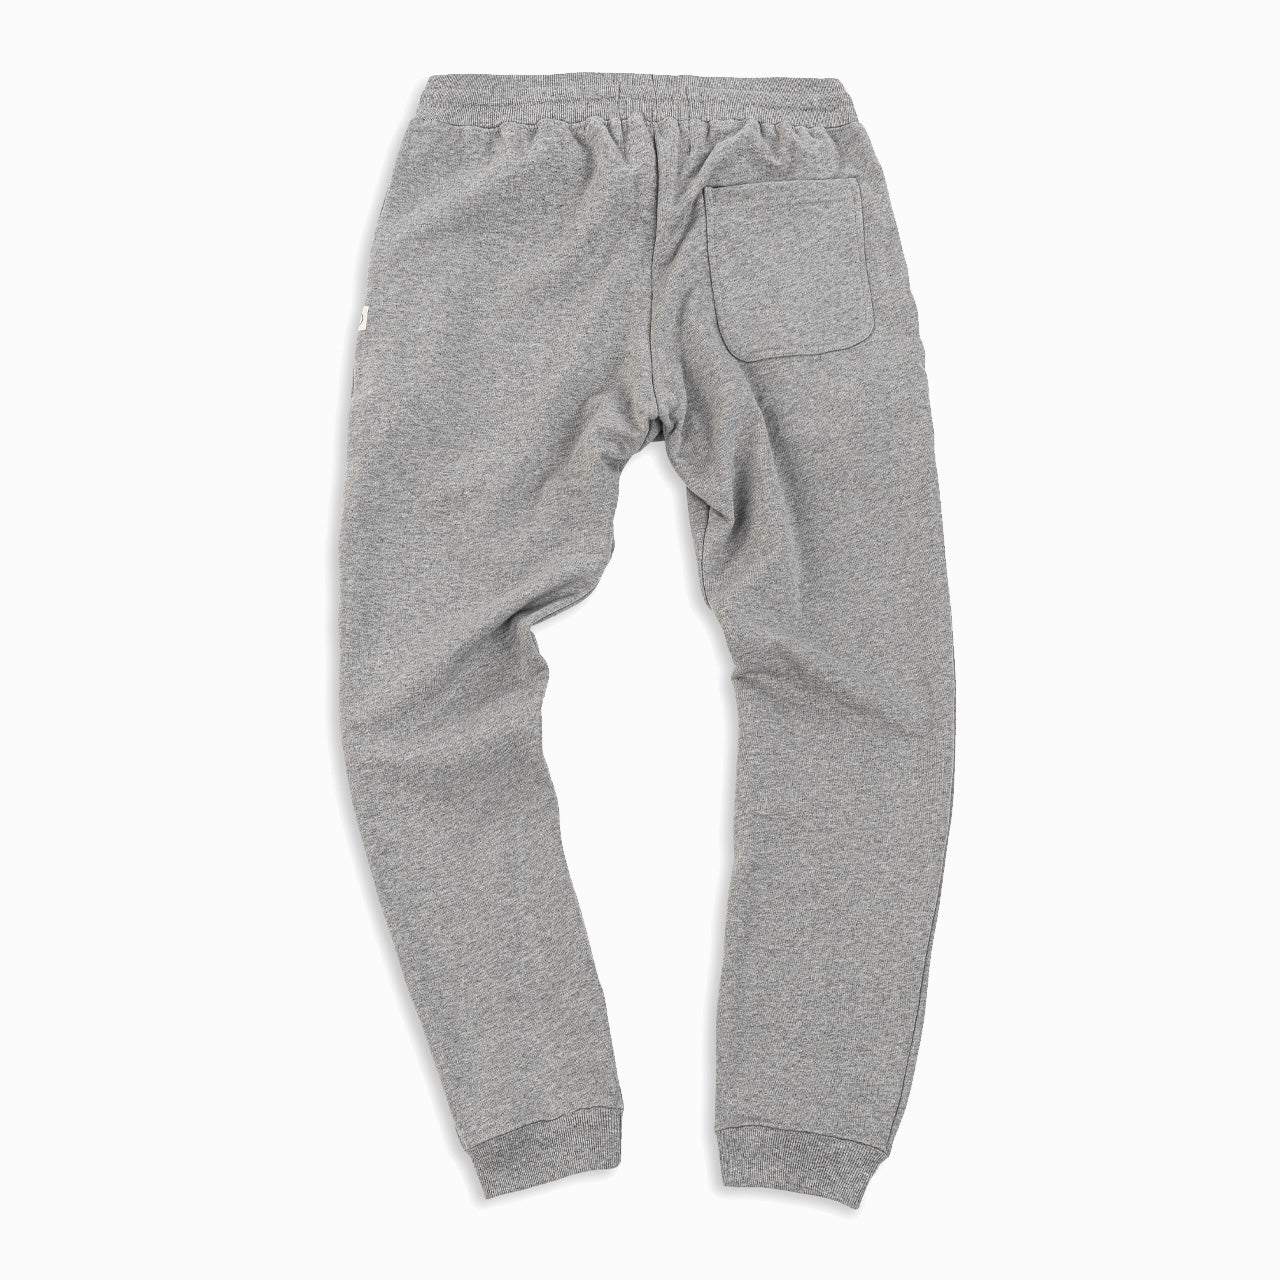 Generic Men's Home Pants Cotton Super Soft Men Joggers Sweatpants